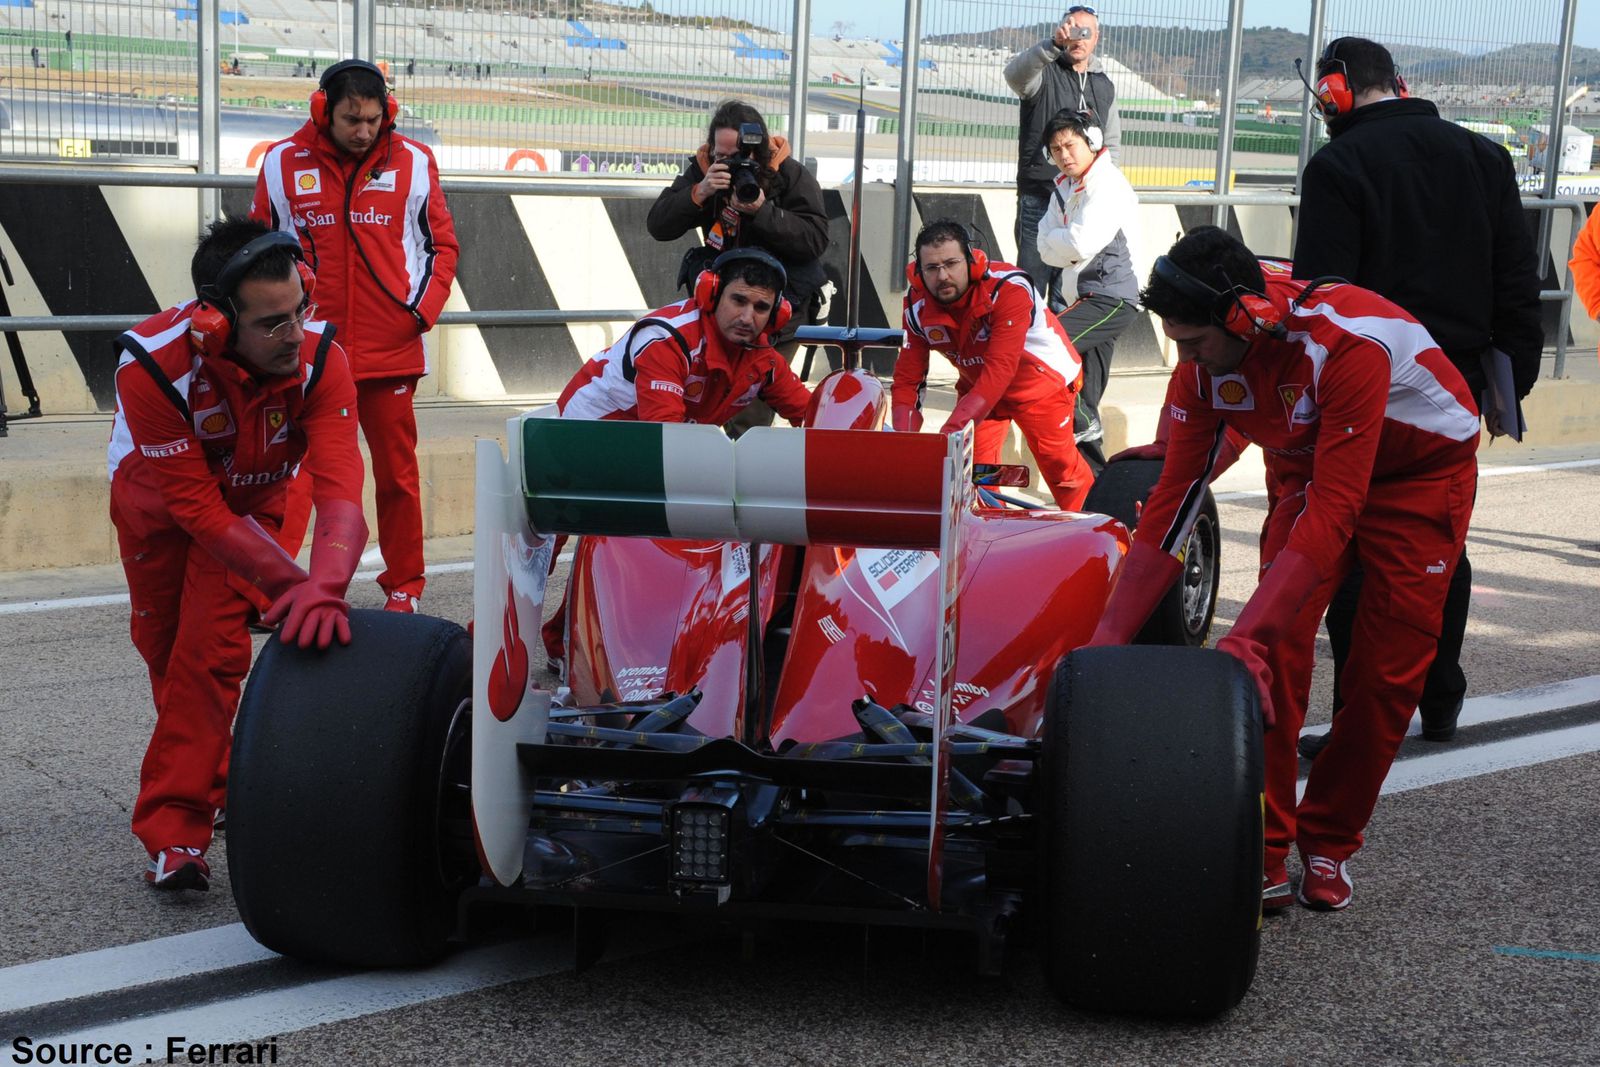 Toutes les photos concernant la Scuderia Ferrari